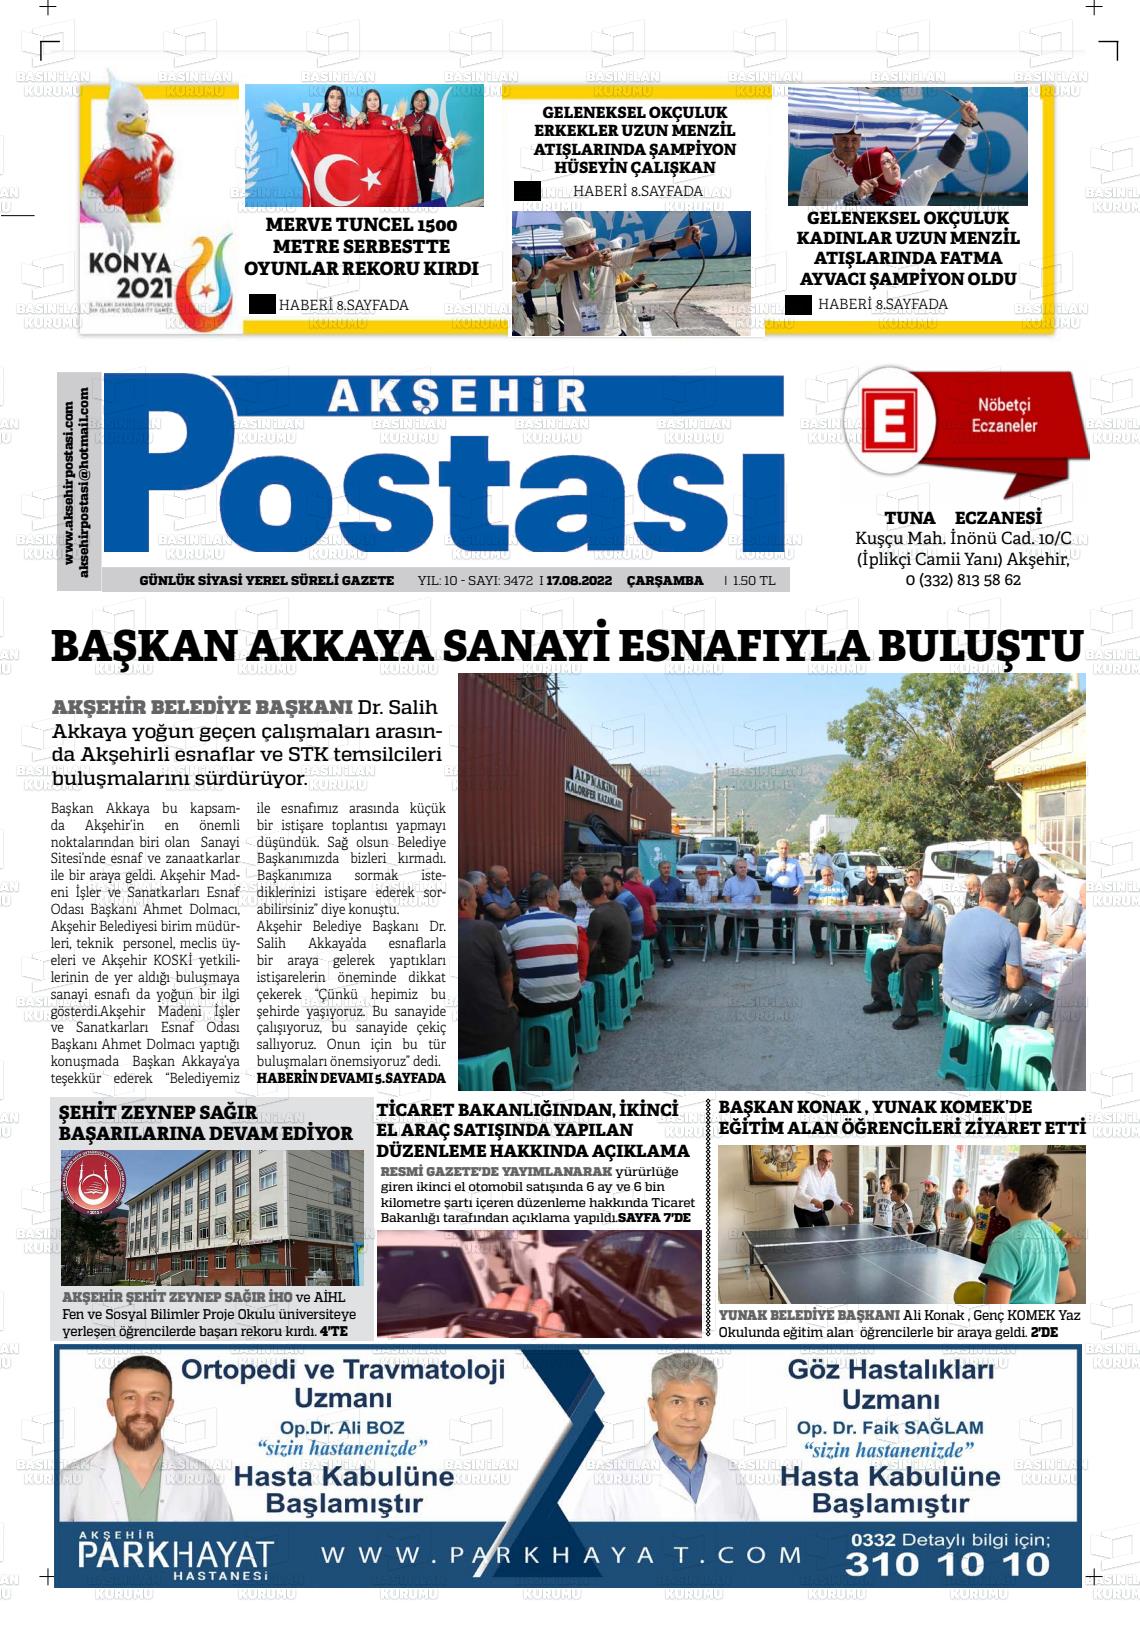 17 Ağustos 2022 Akşehir Postasi Gazete Manşeti